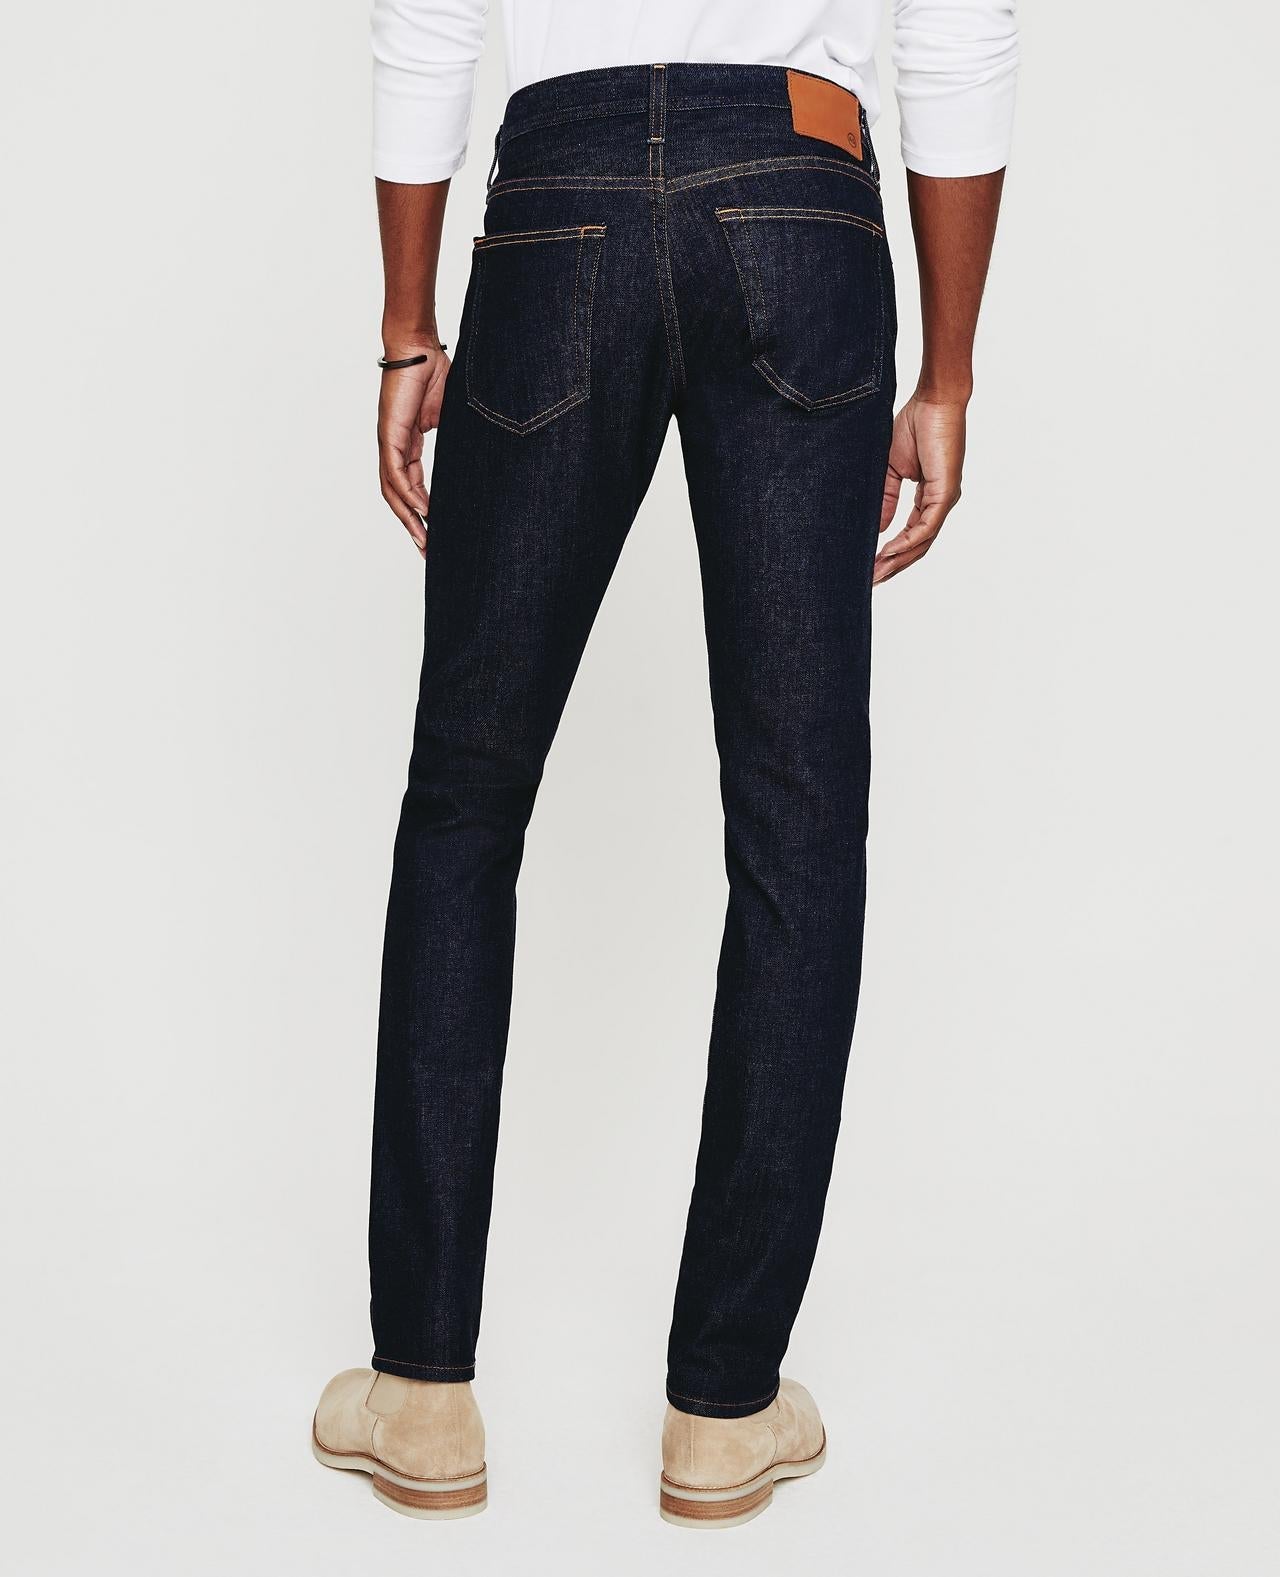 Tellis Modern Slim Jean - AG Jeans - Danali - 1783TSY-CUCL-29